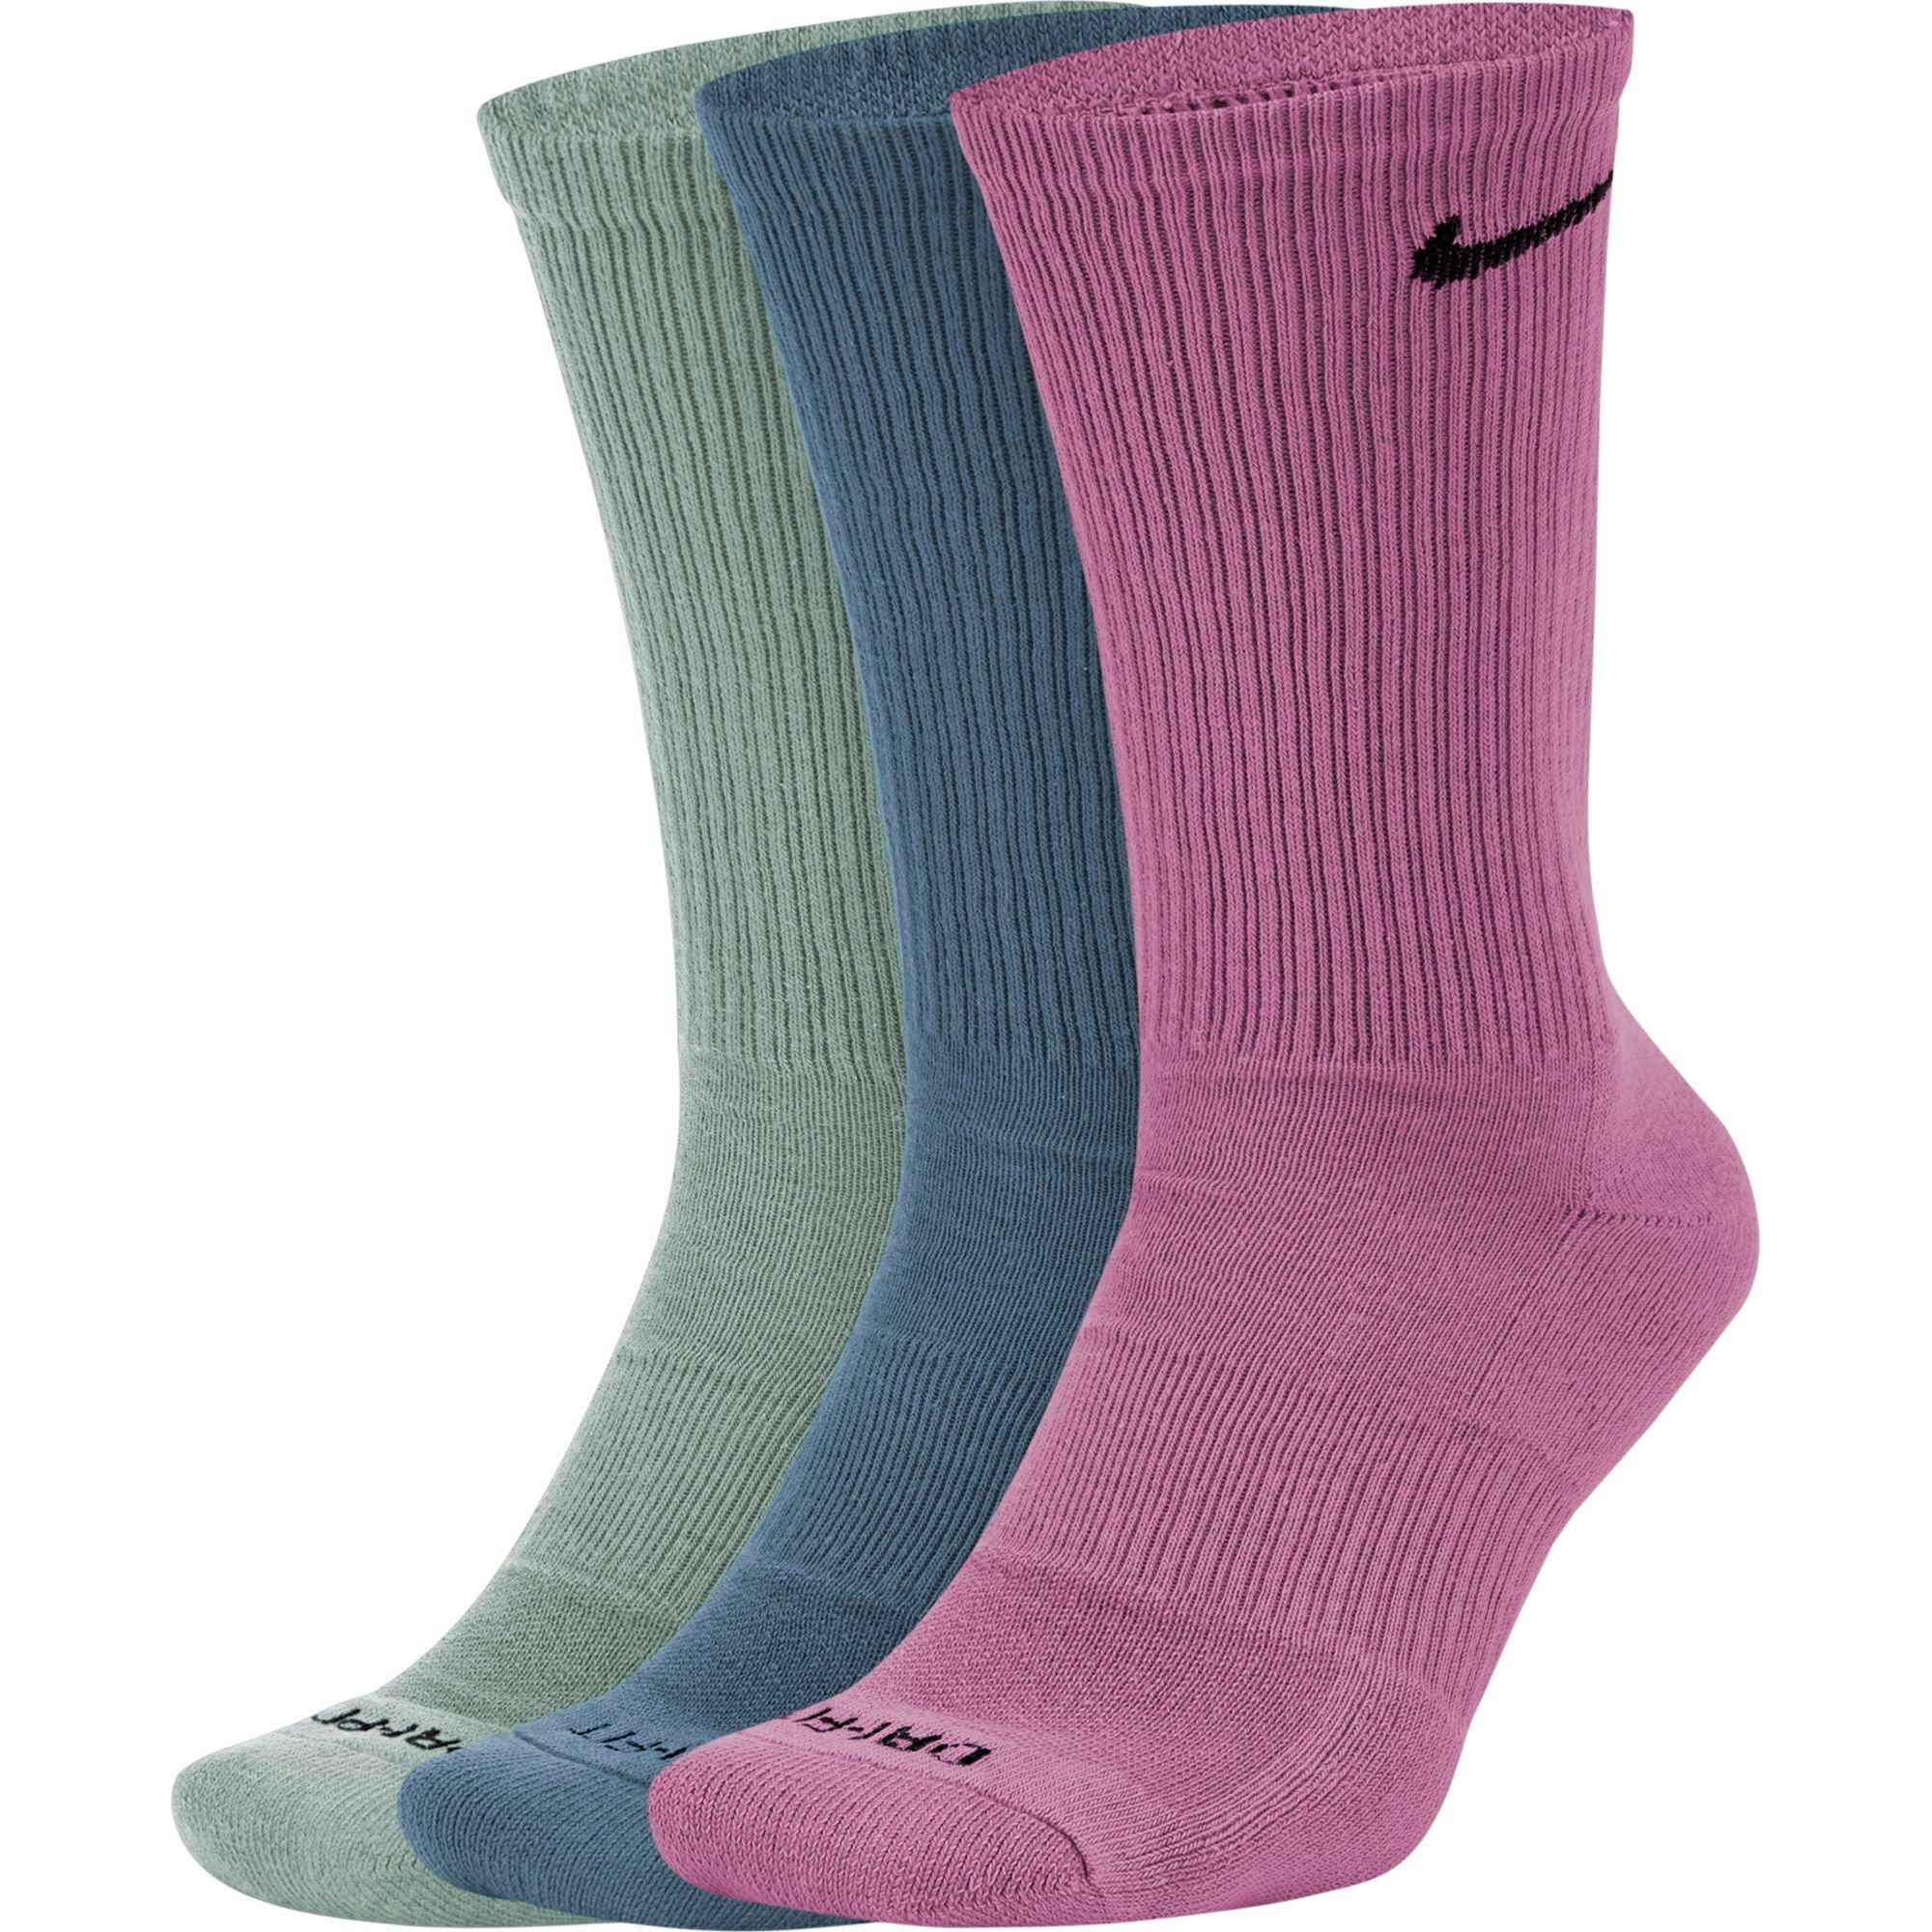 hibbett sports jordan socks